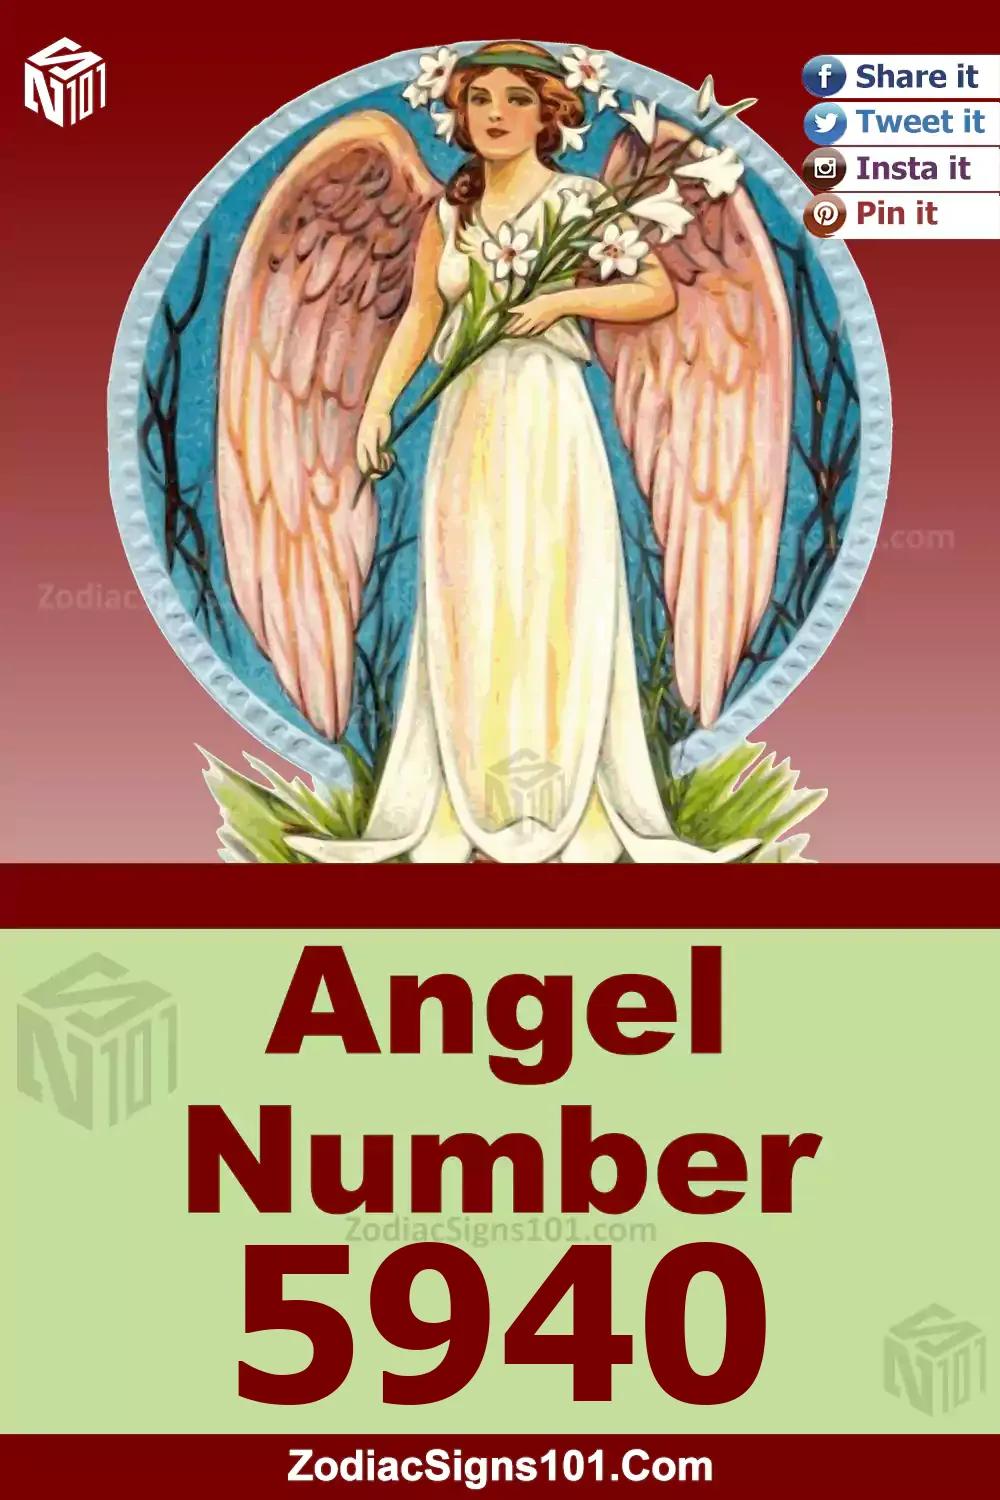 5940-Angel-Number-Meaning.jpg